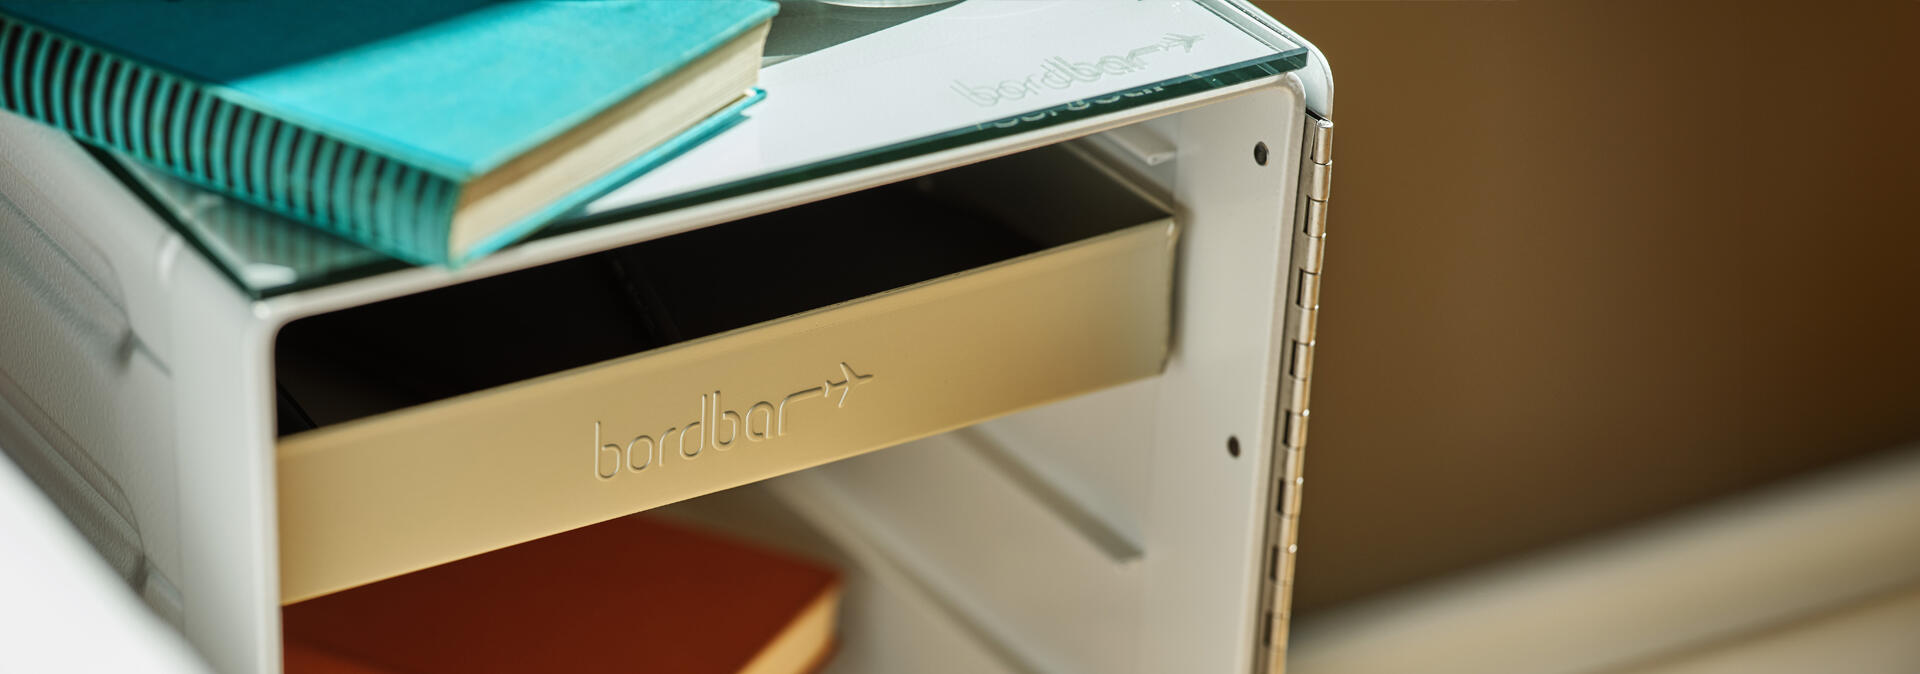 bordbar_box bedside table desktop